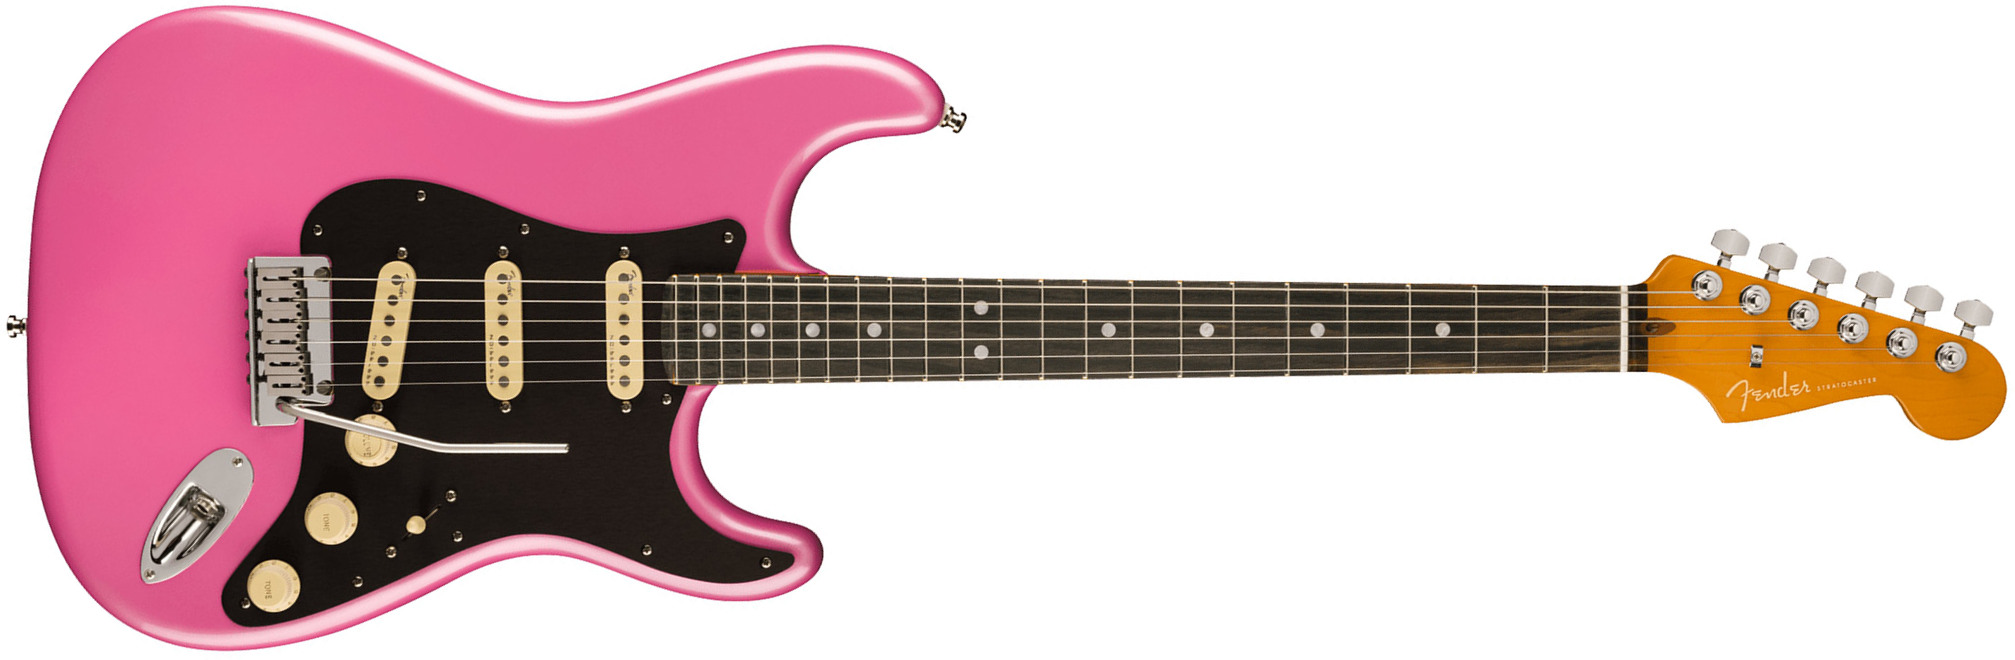 Fender Strat American Ultra Ltd Usa 3s Trem Eb - Bubble Gum Metallic - Str shape electric guitar - Main picture